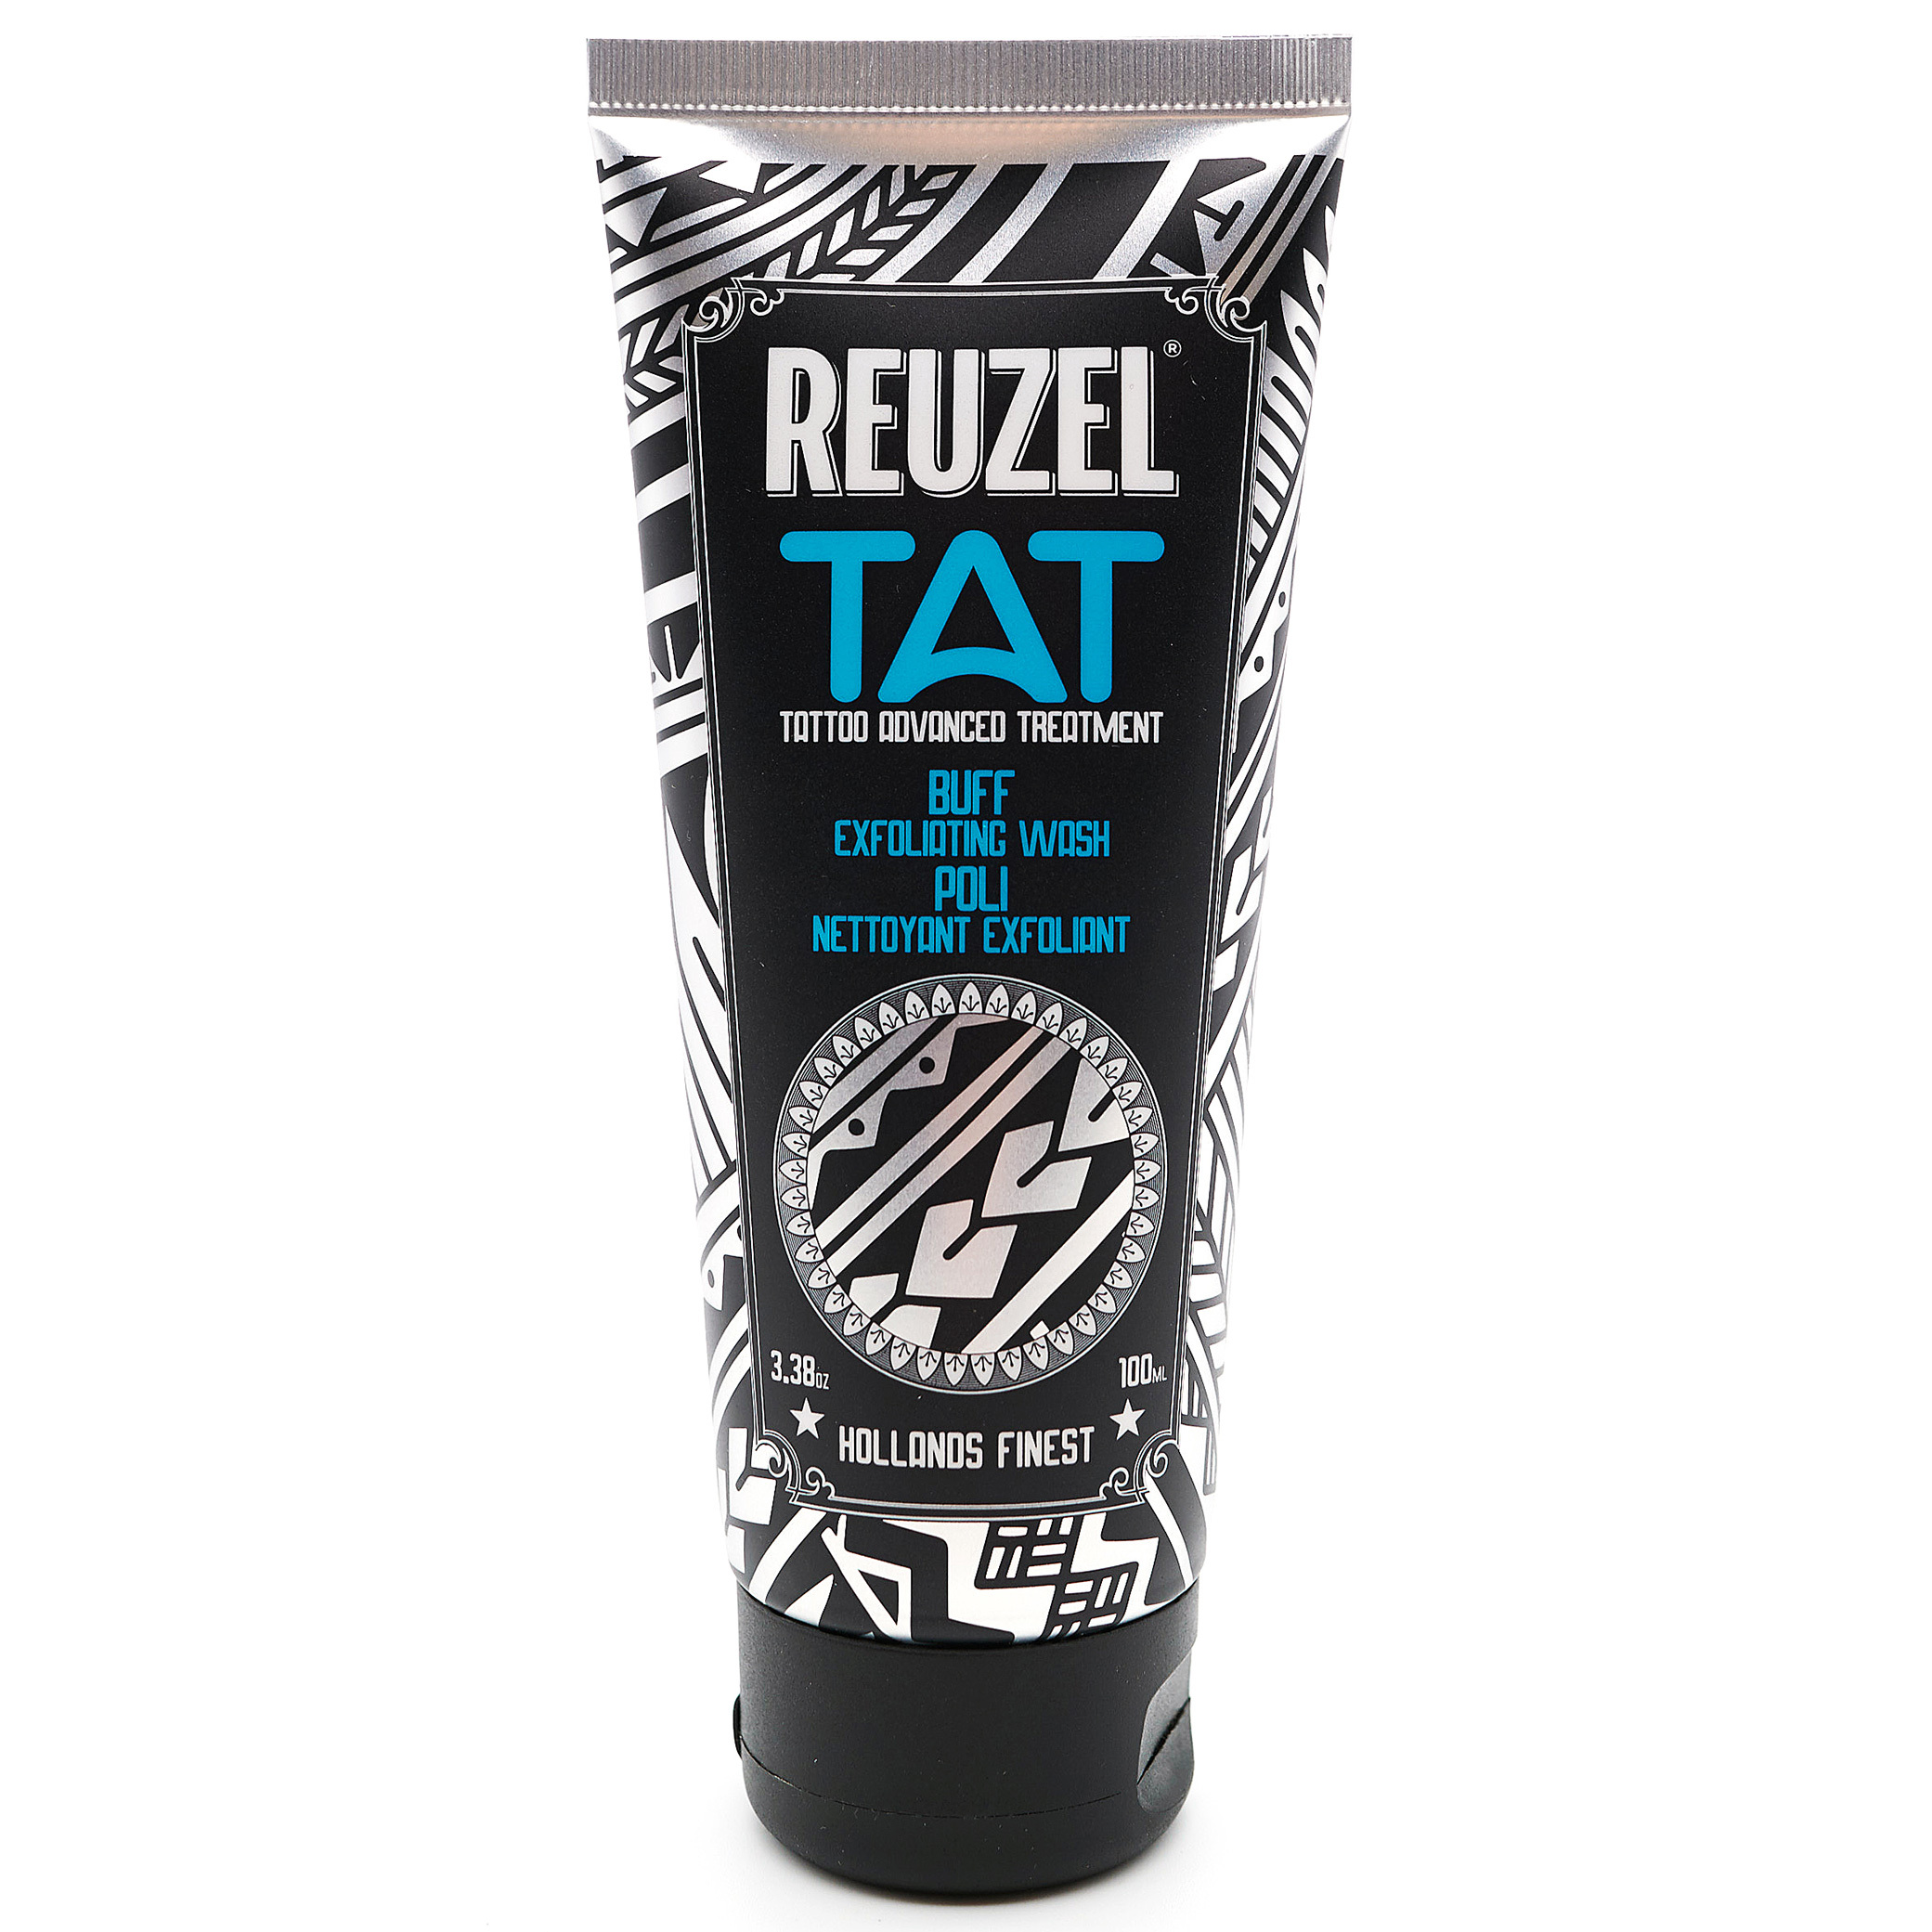 Reuzel Tattoo Care: Step #1 - Buff Exfoliating Wash 3.38oz